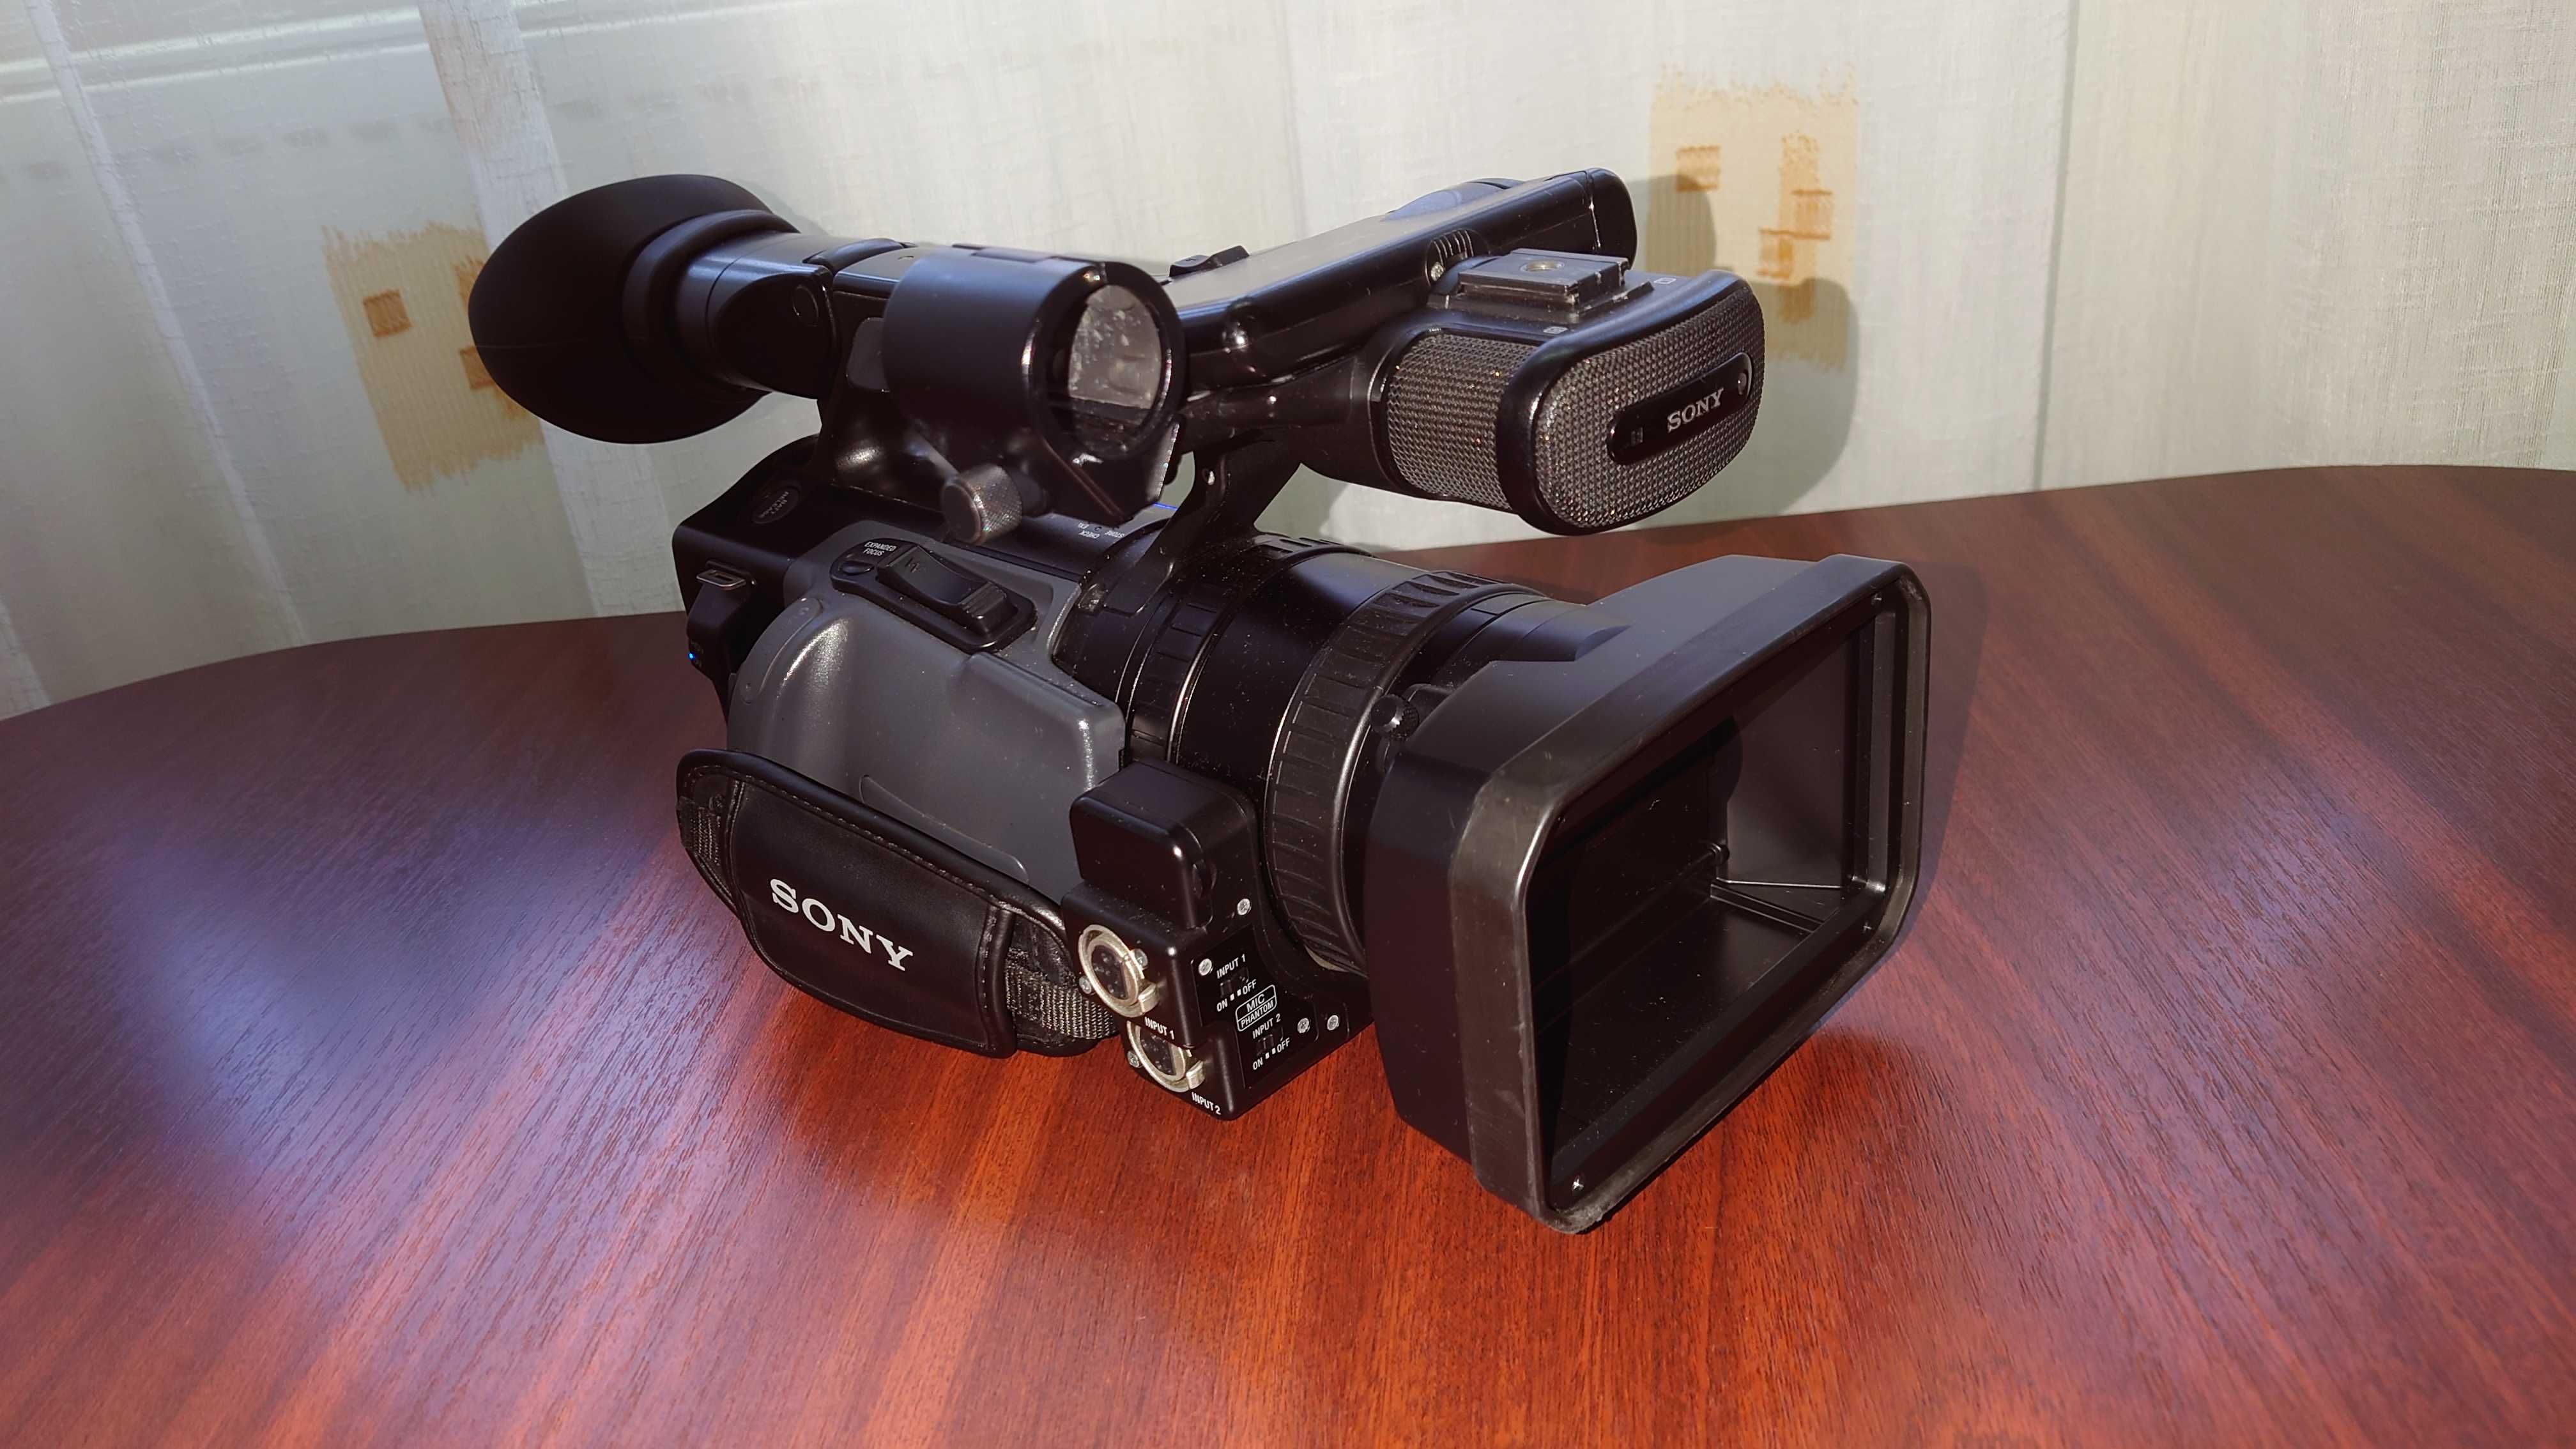 Camera video SONY HVR-Z1U